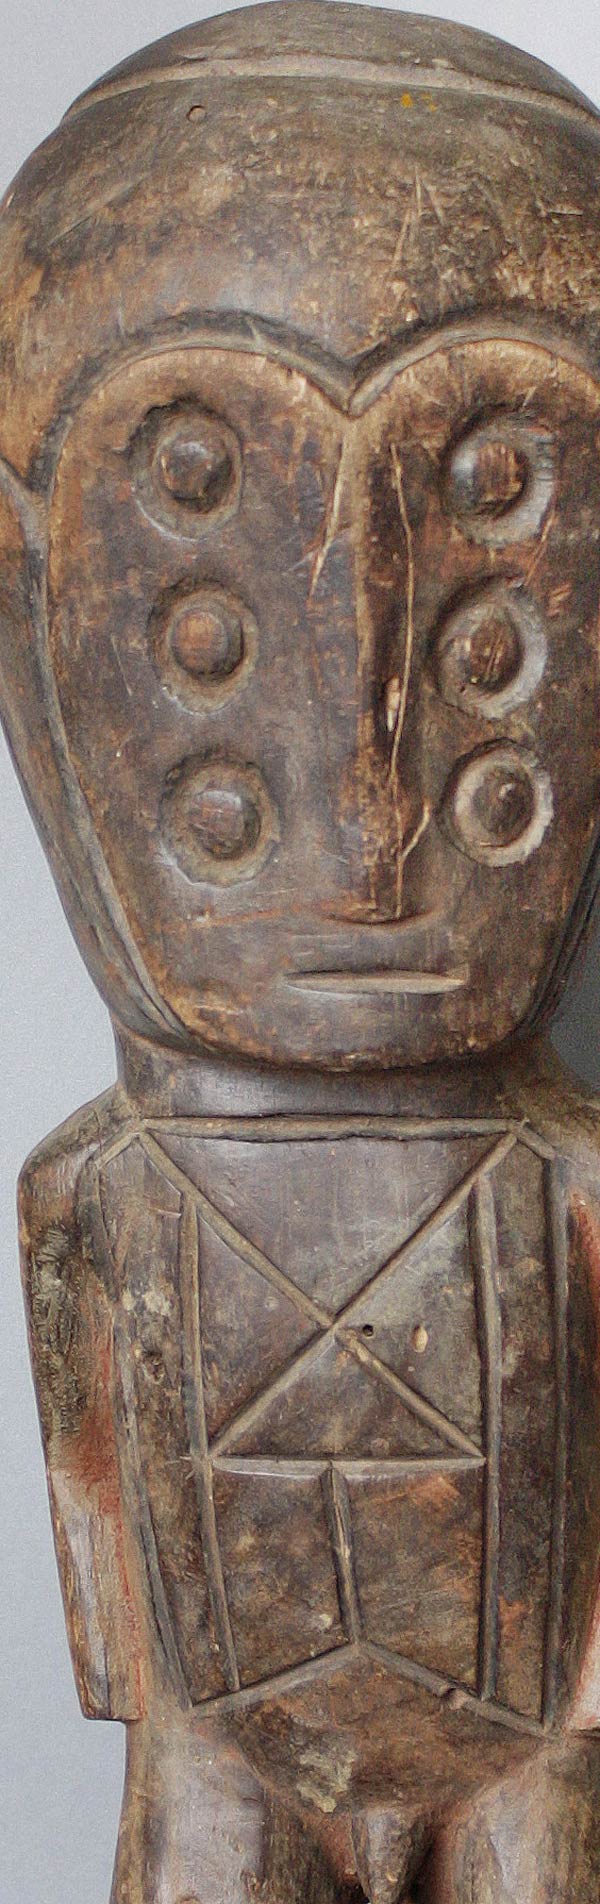 Sechsaeugige Ntanda Figur Mituku Kongo A1